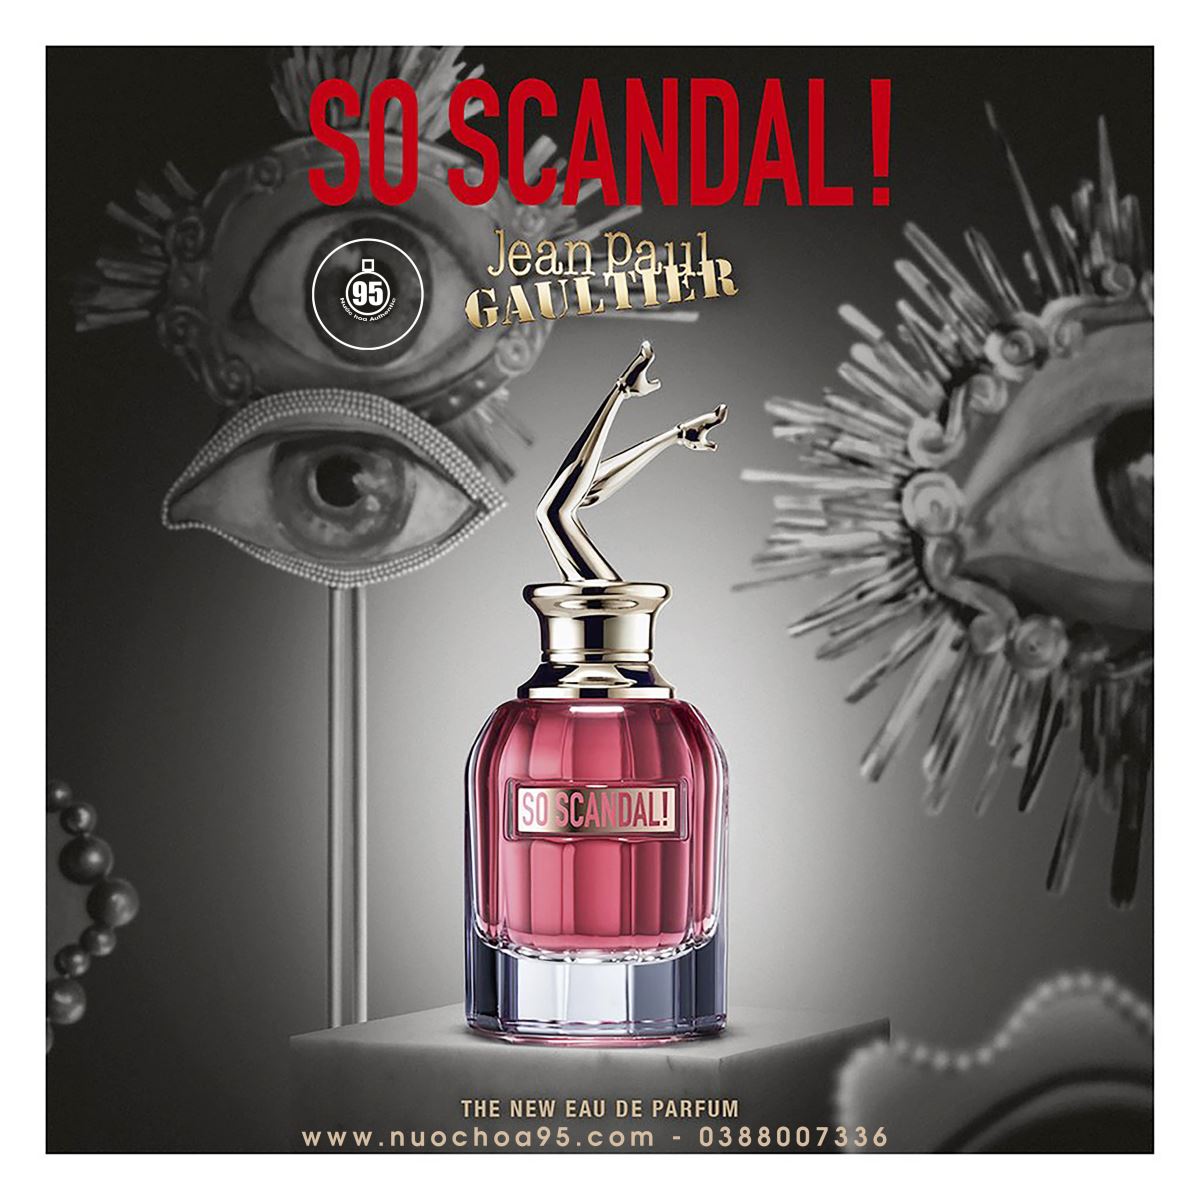 Nước hoa Jean Paul Gaultier So Scandal  - Ảnh 2